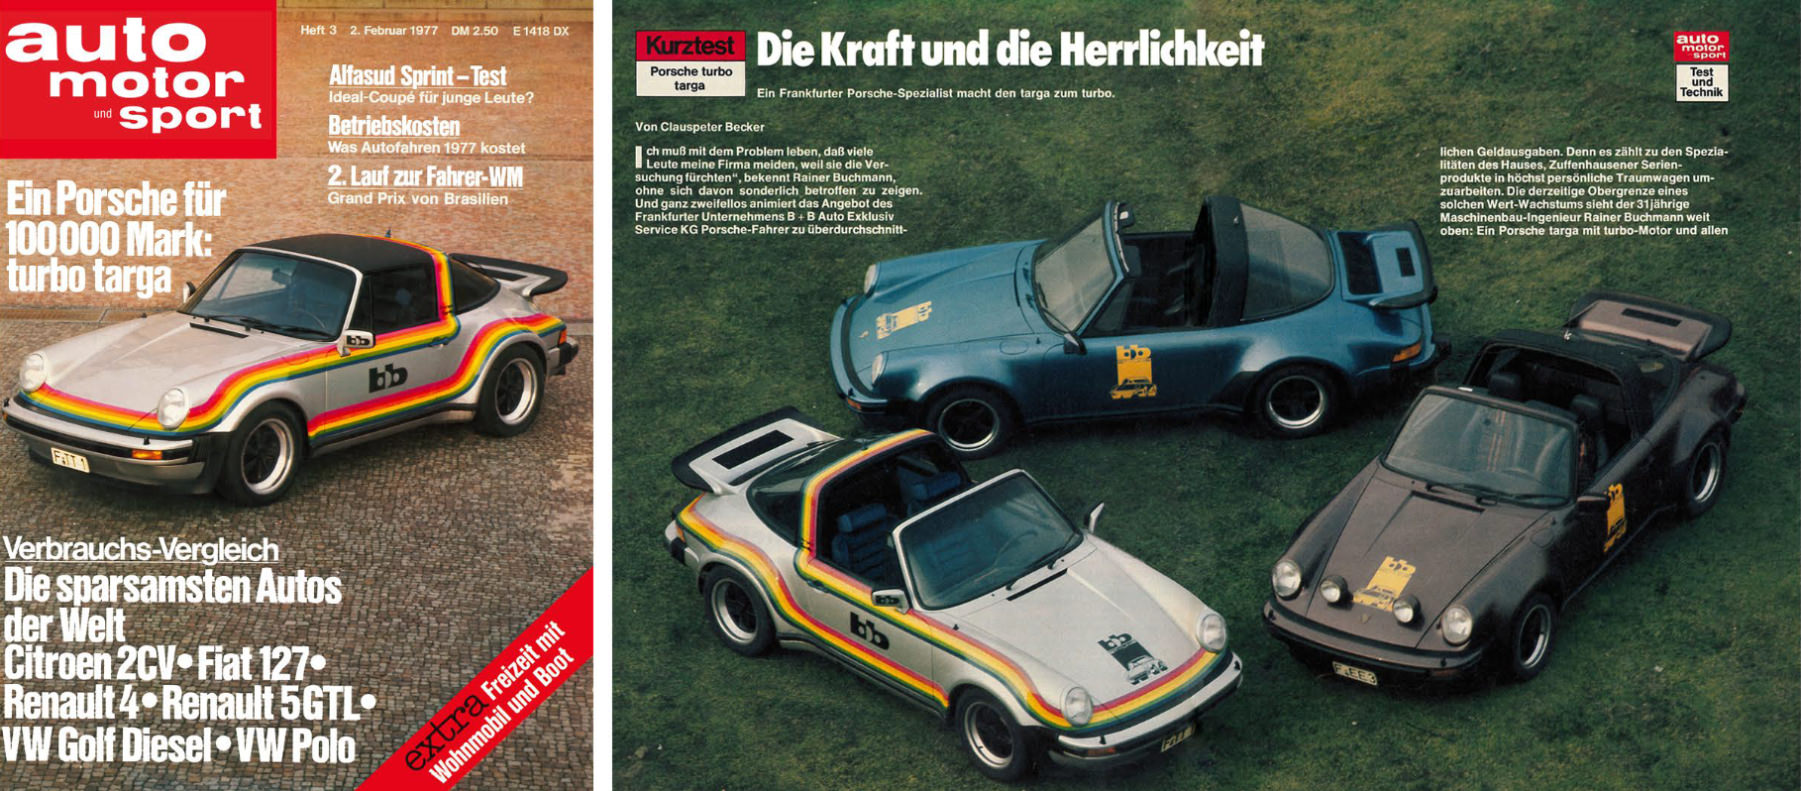 AutoMotor und Sport-Heft 3 -2.Februar-1977